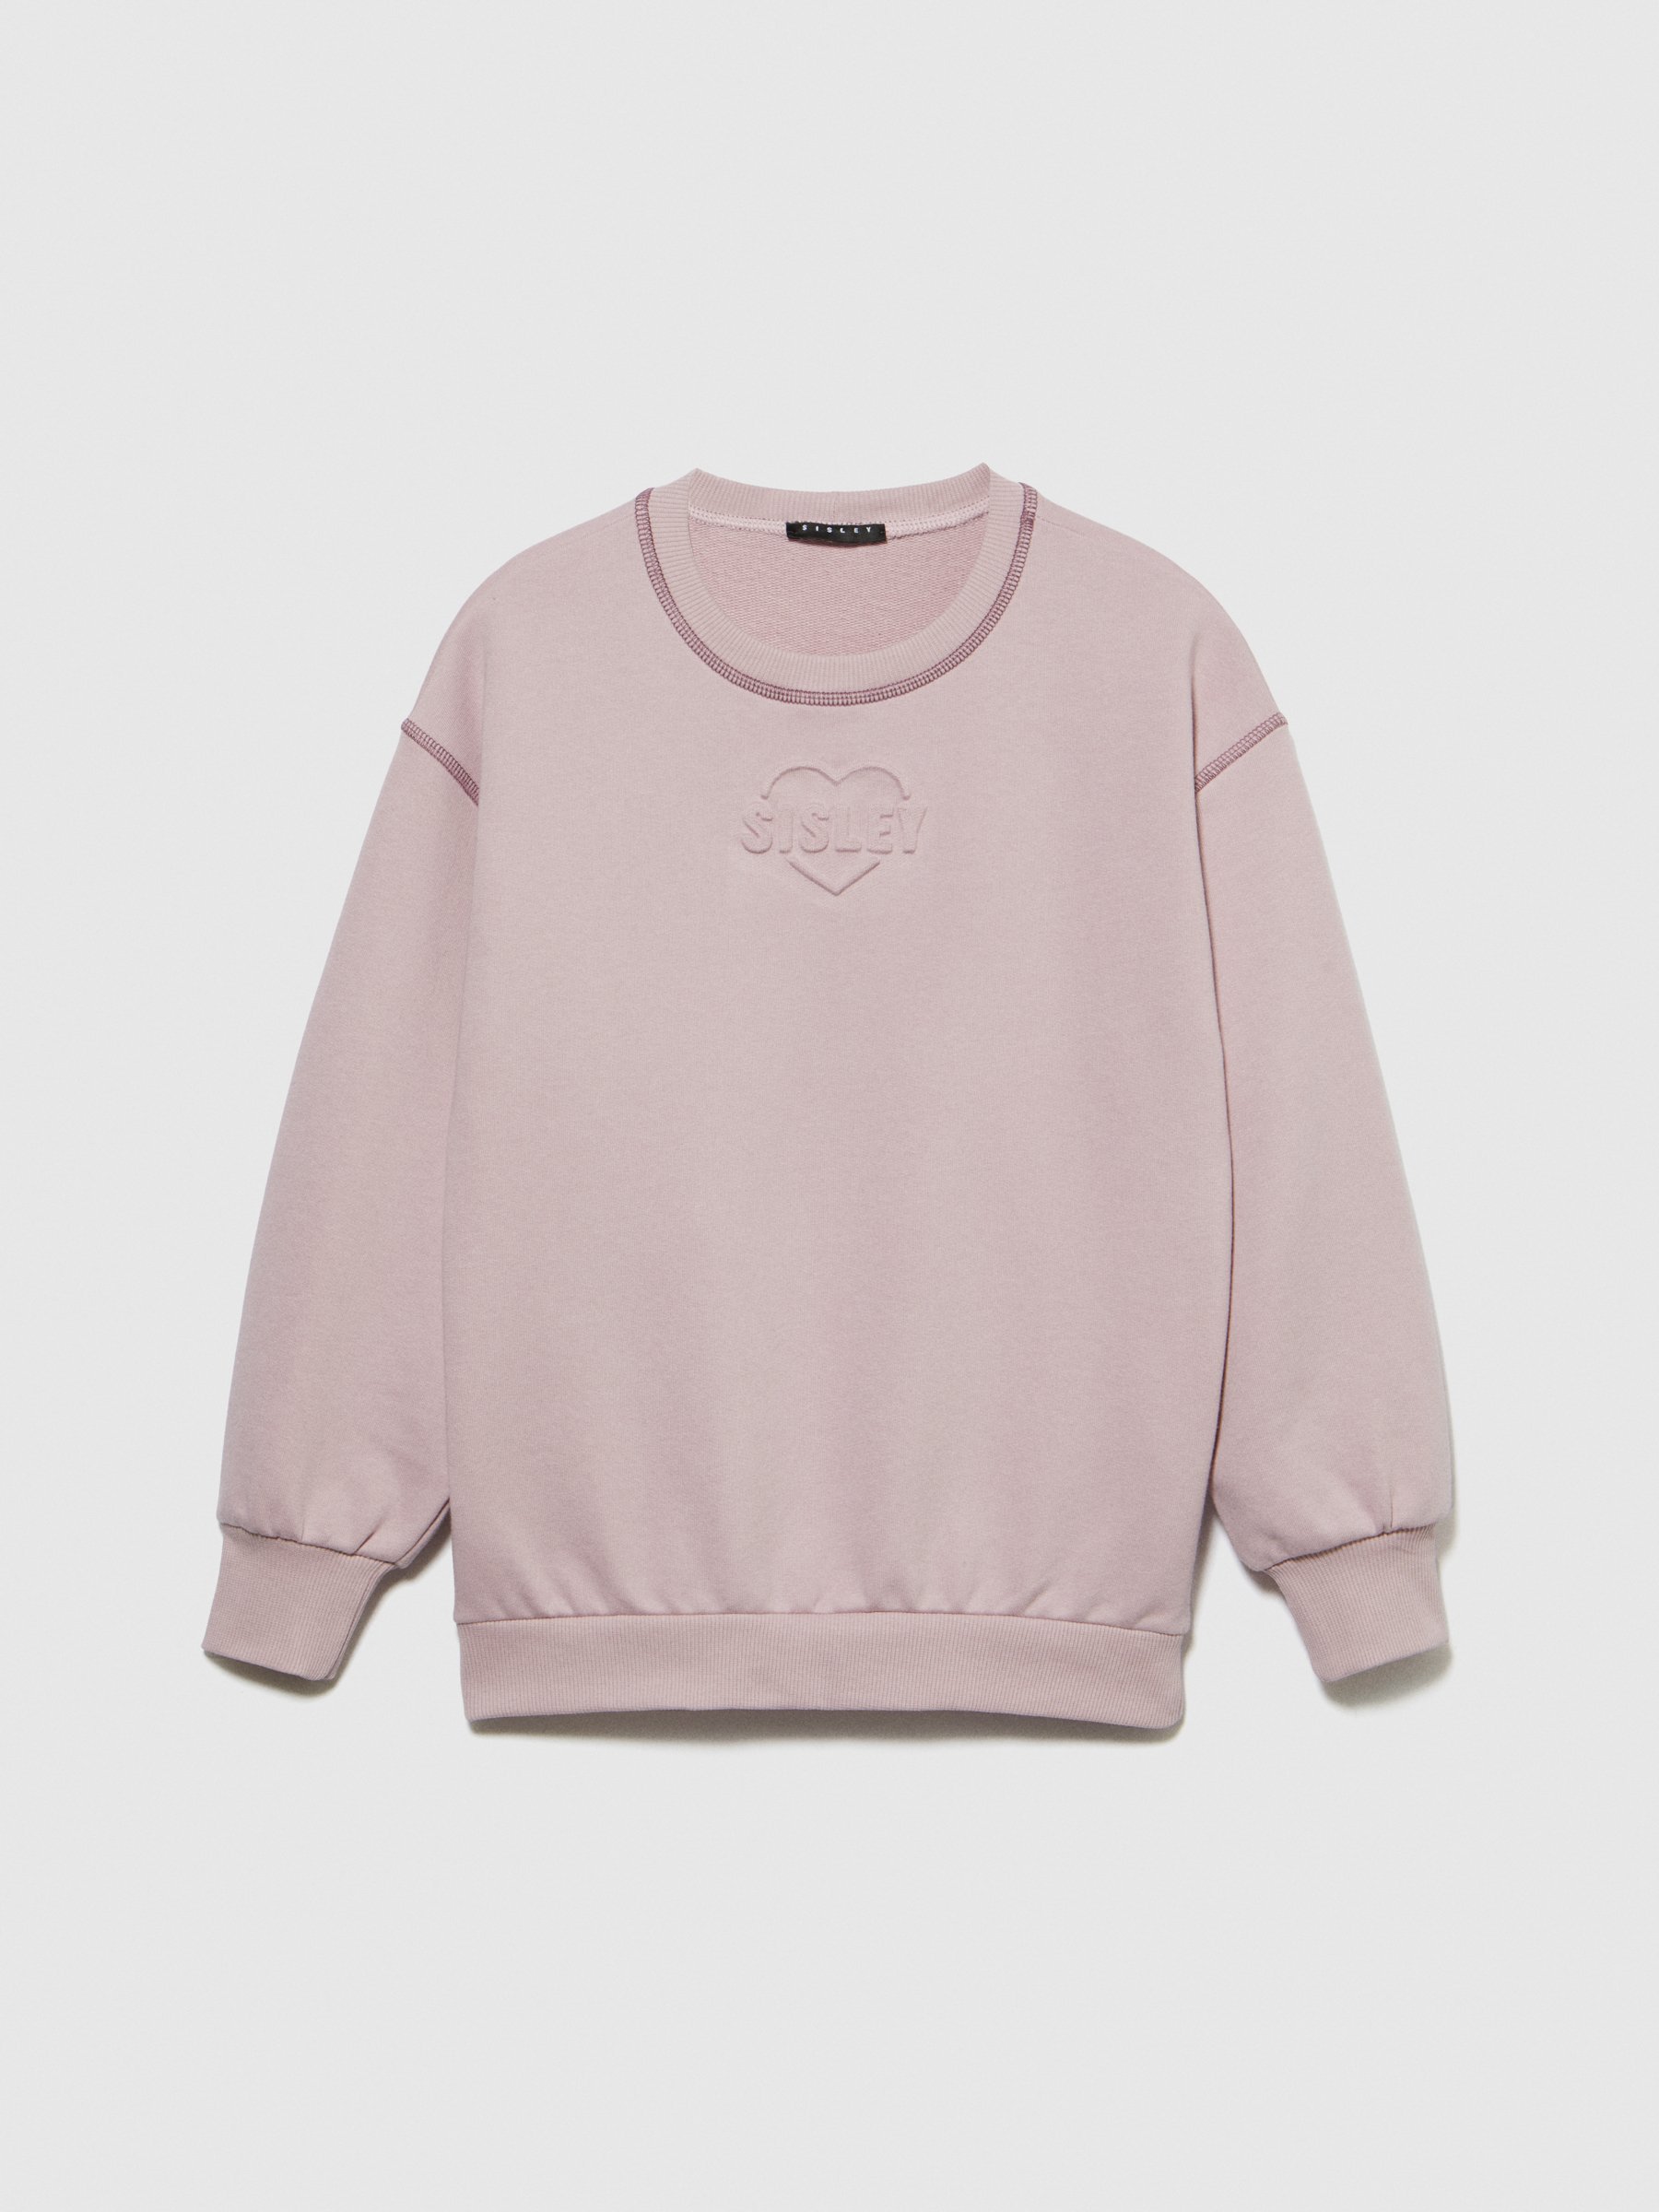 Sisley Young - Sweatshirt With Embossed Print, Woman, Pastel Pink, Size: XS